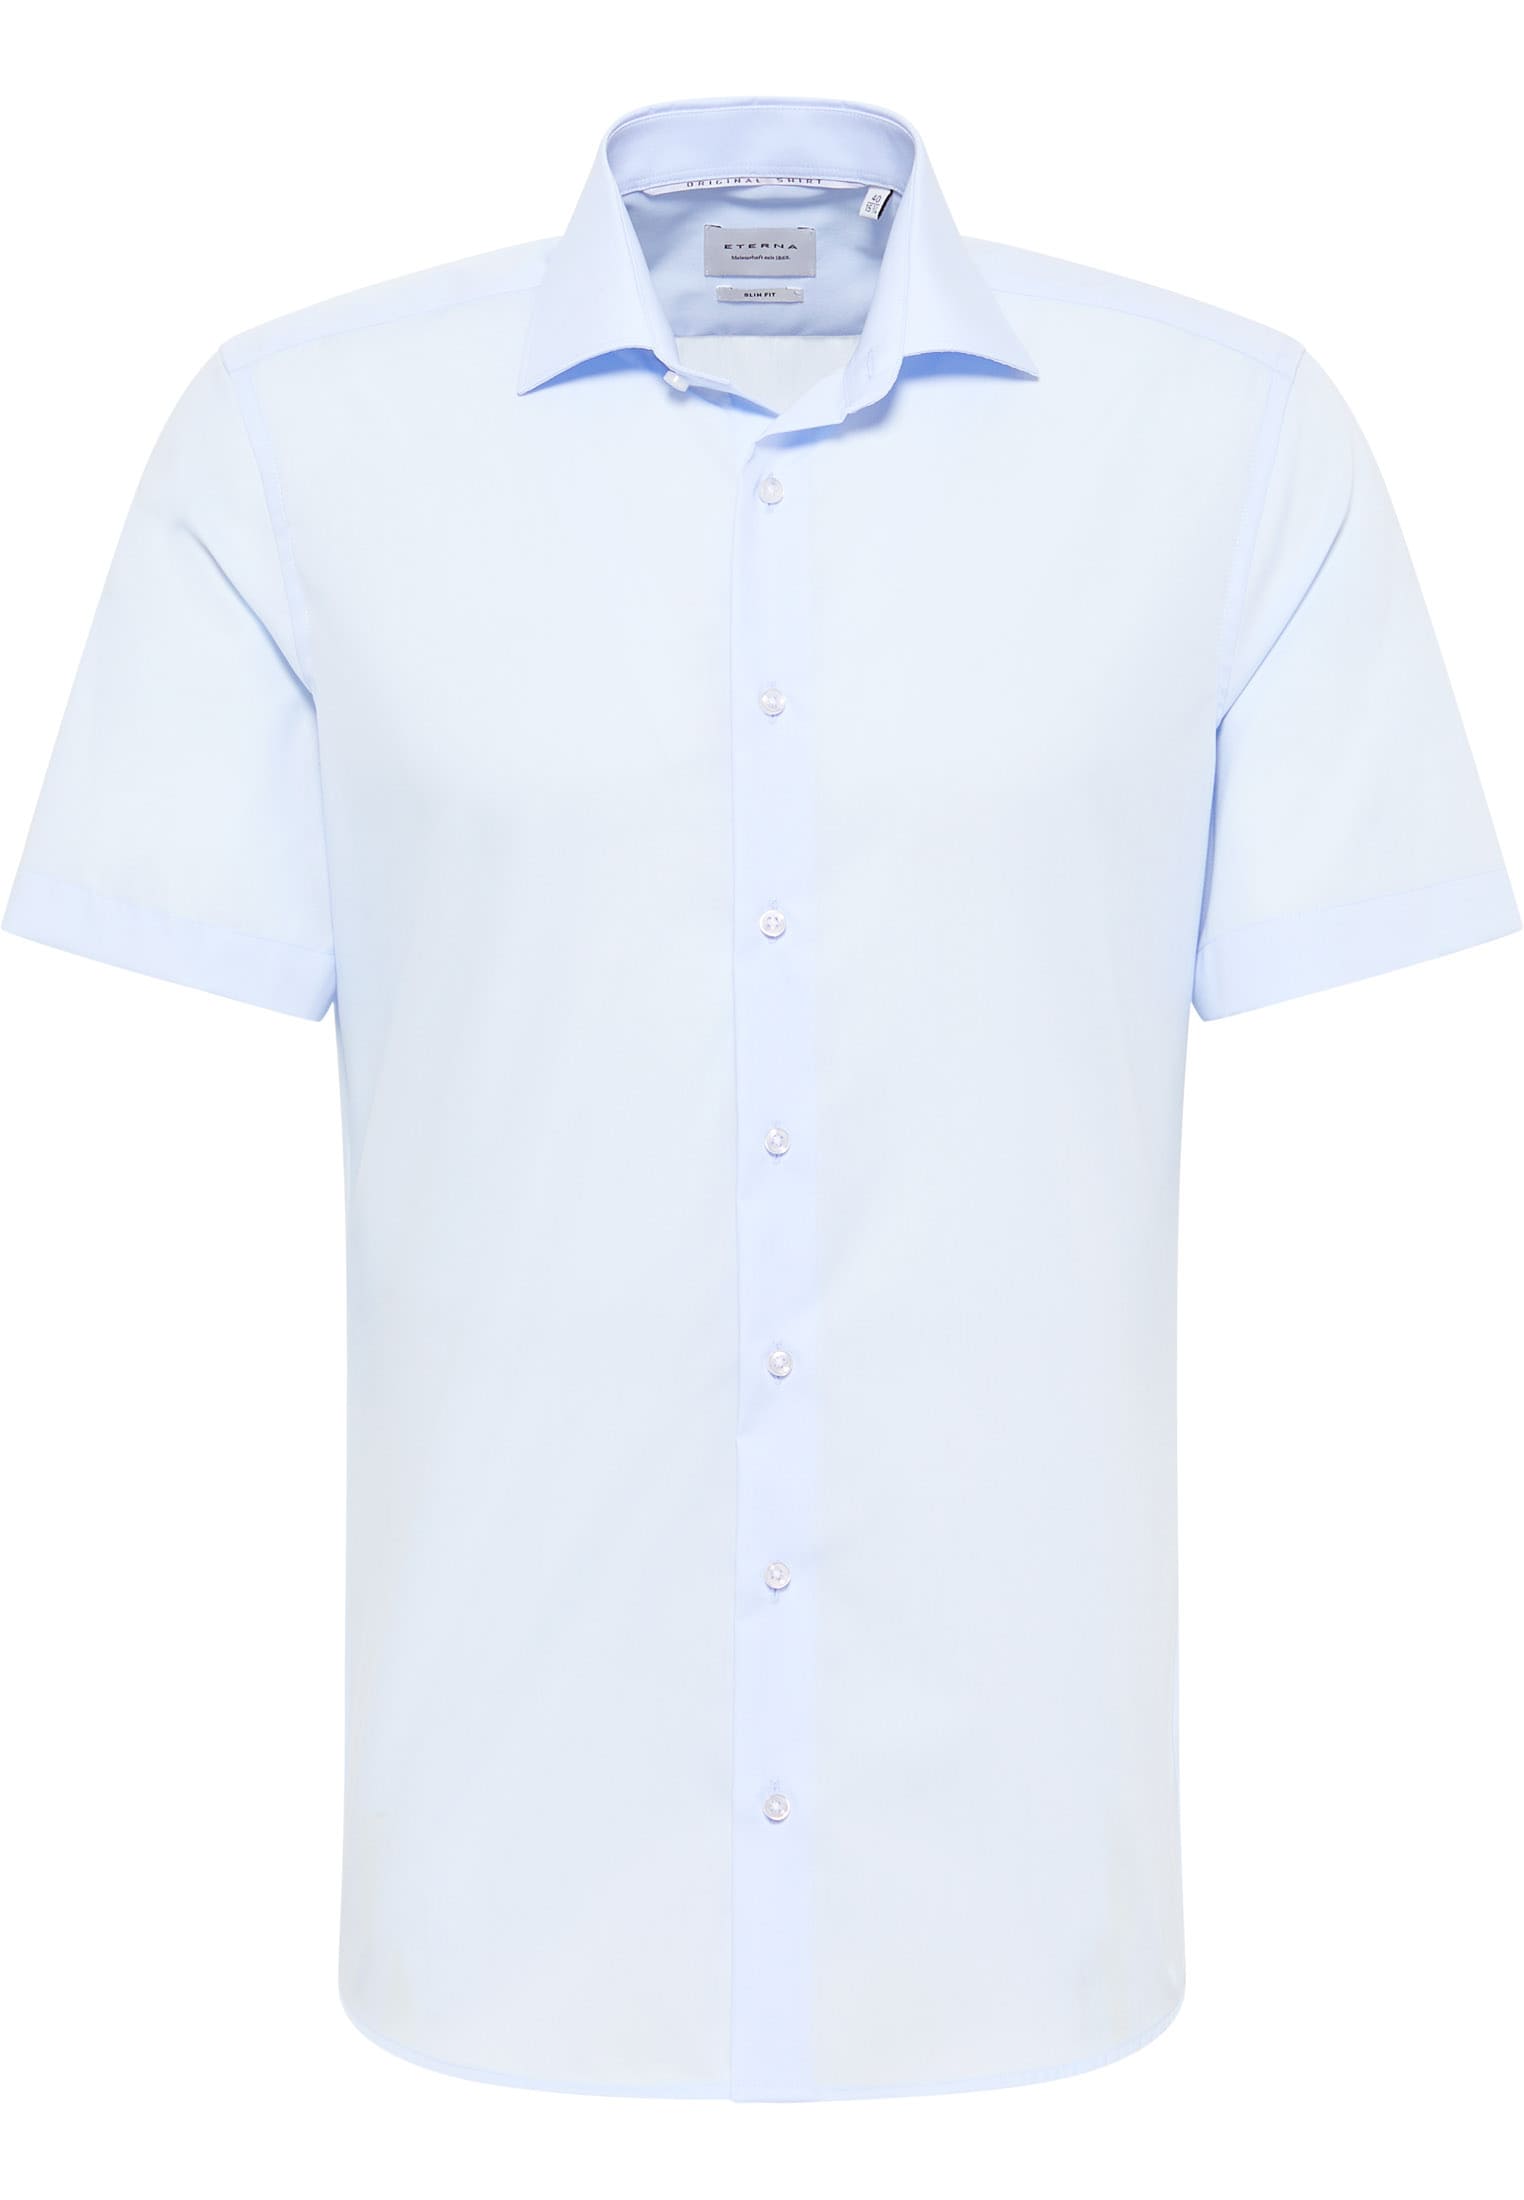 SLIM FIT Original Shirt in light blue plain